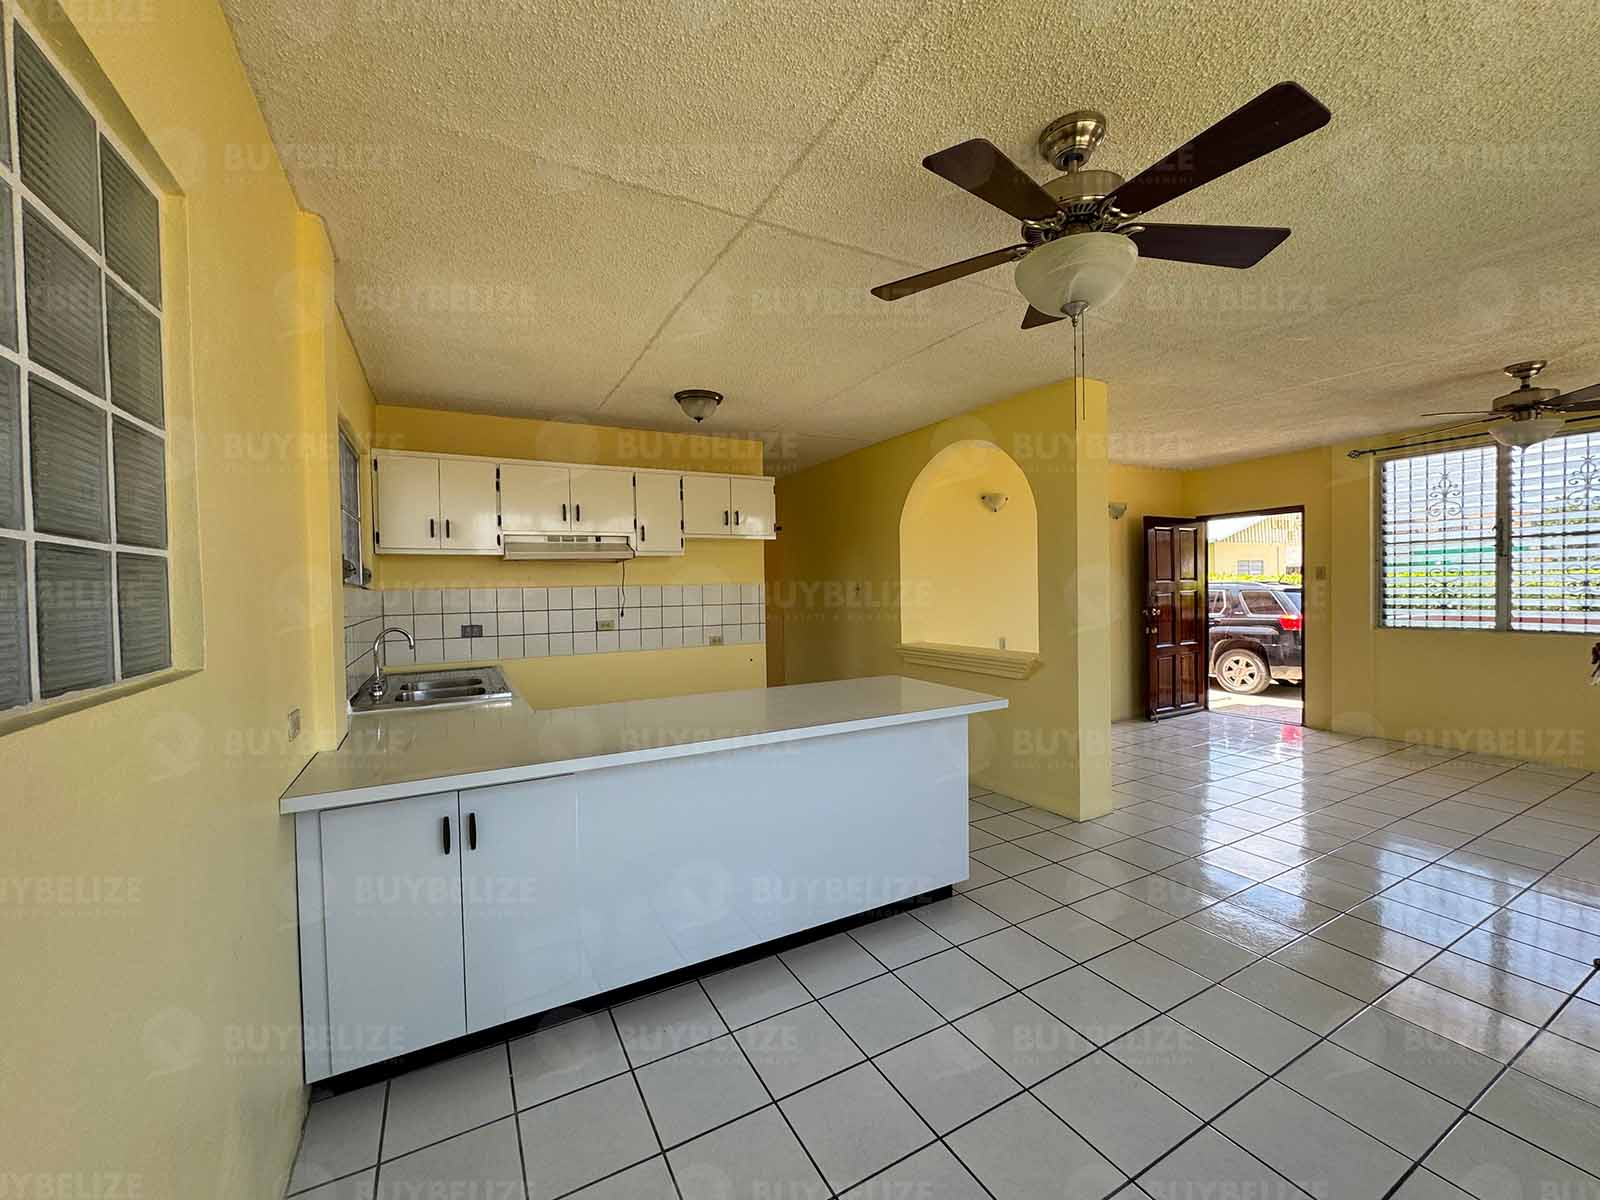 3 Bedroom Apartment for rent in Belize City